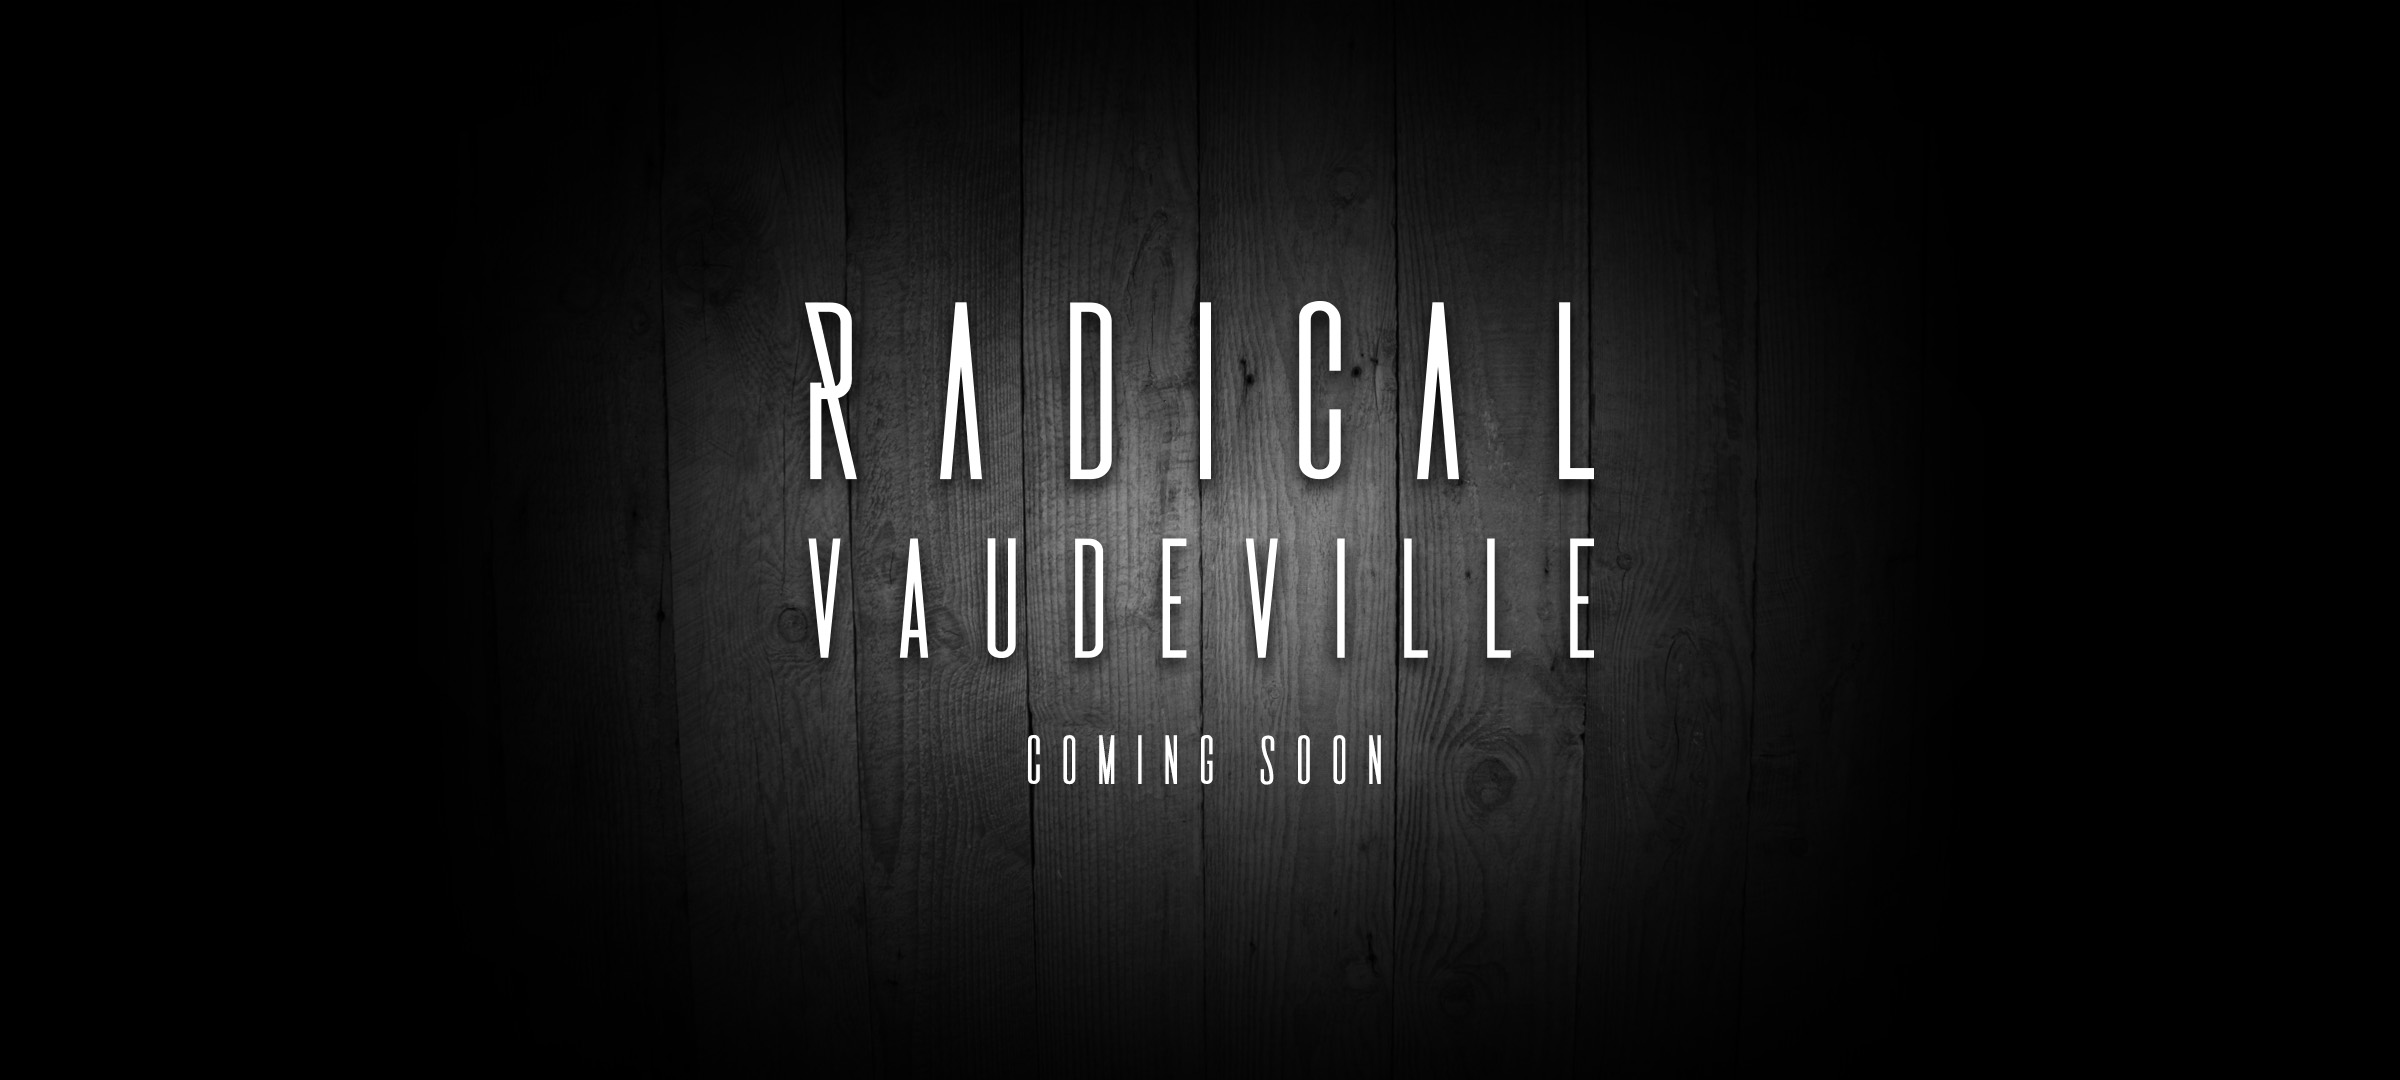 Radical Vaudeville Coming Soon